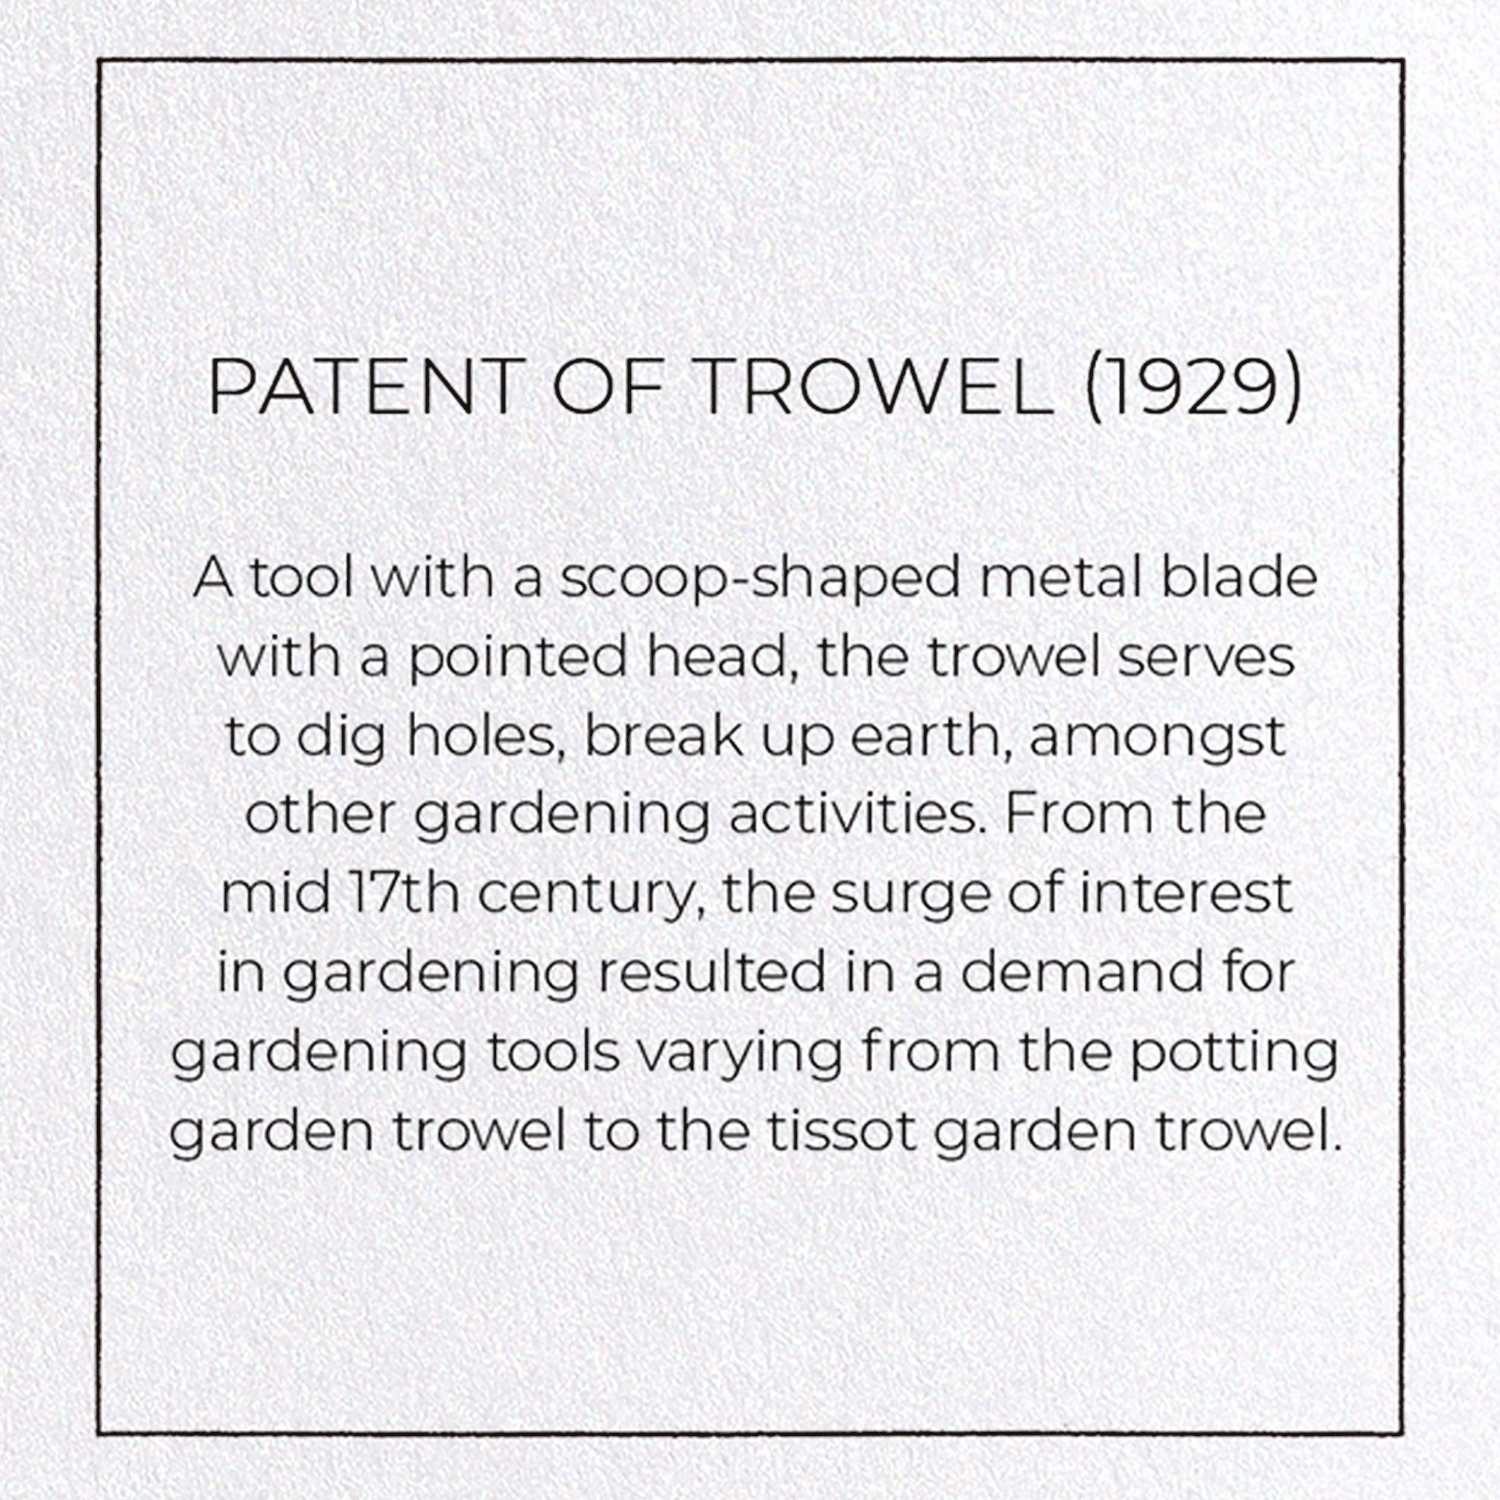 PATENT OF TROWEL (1929)